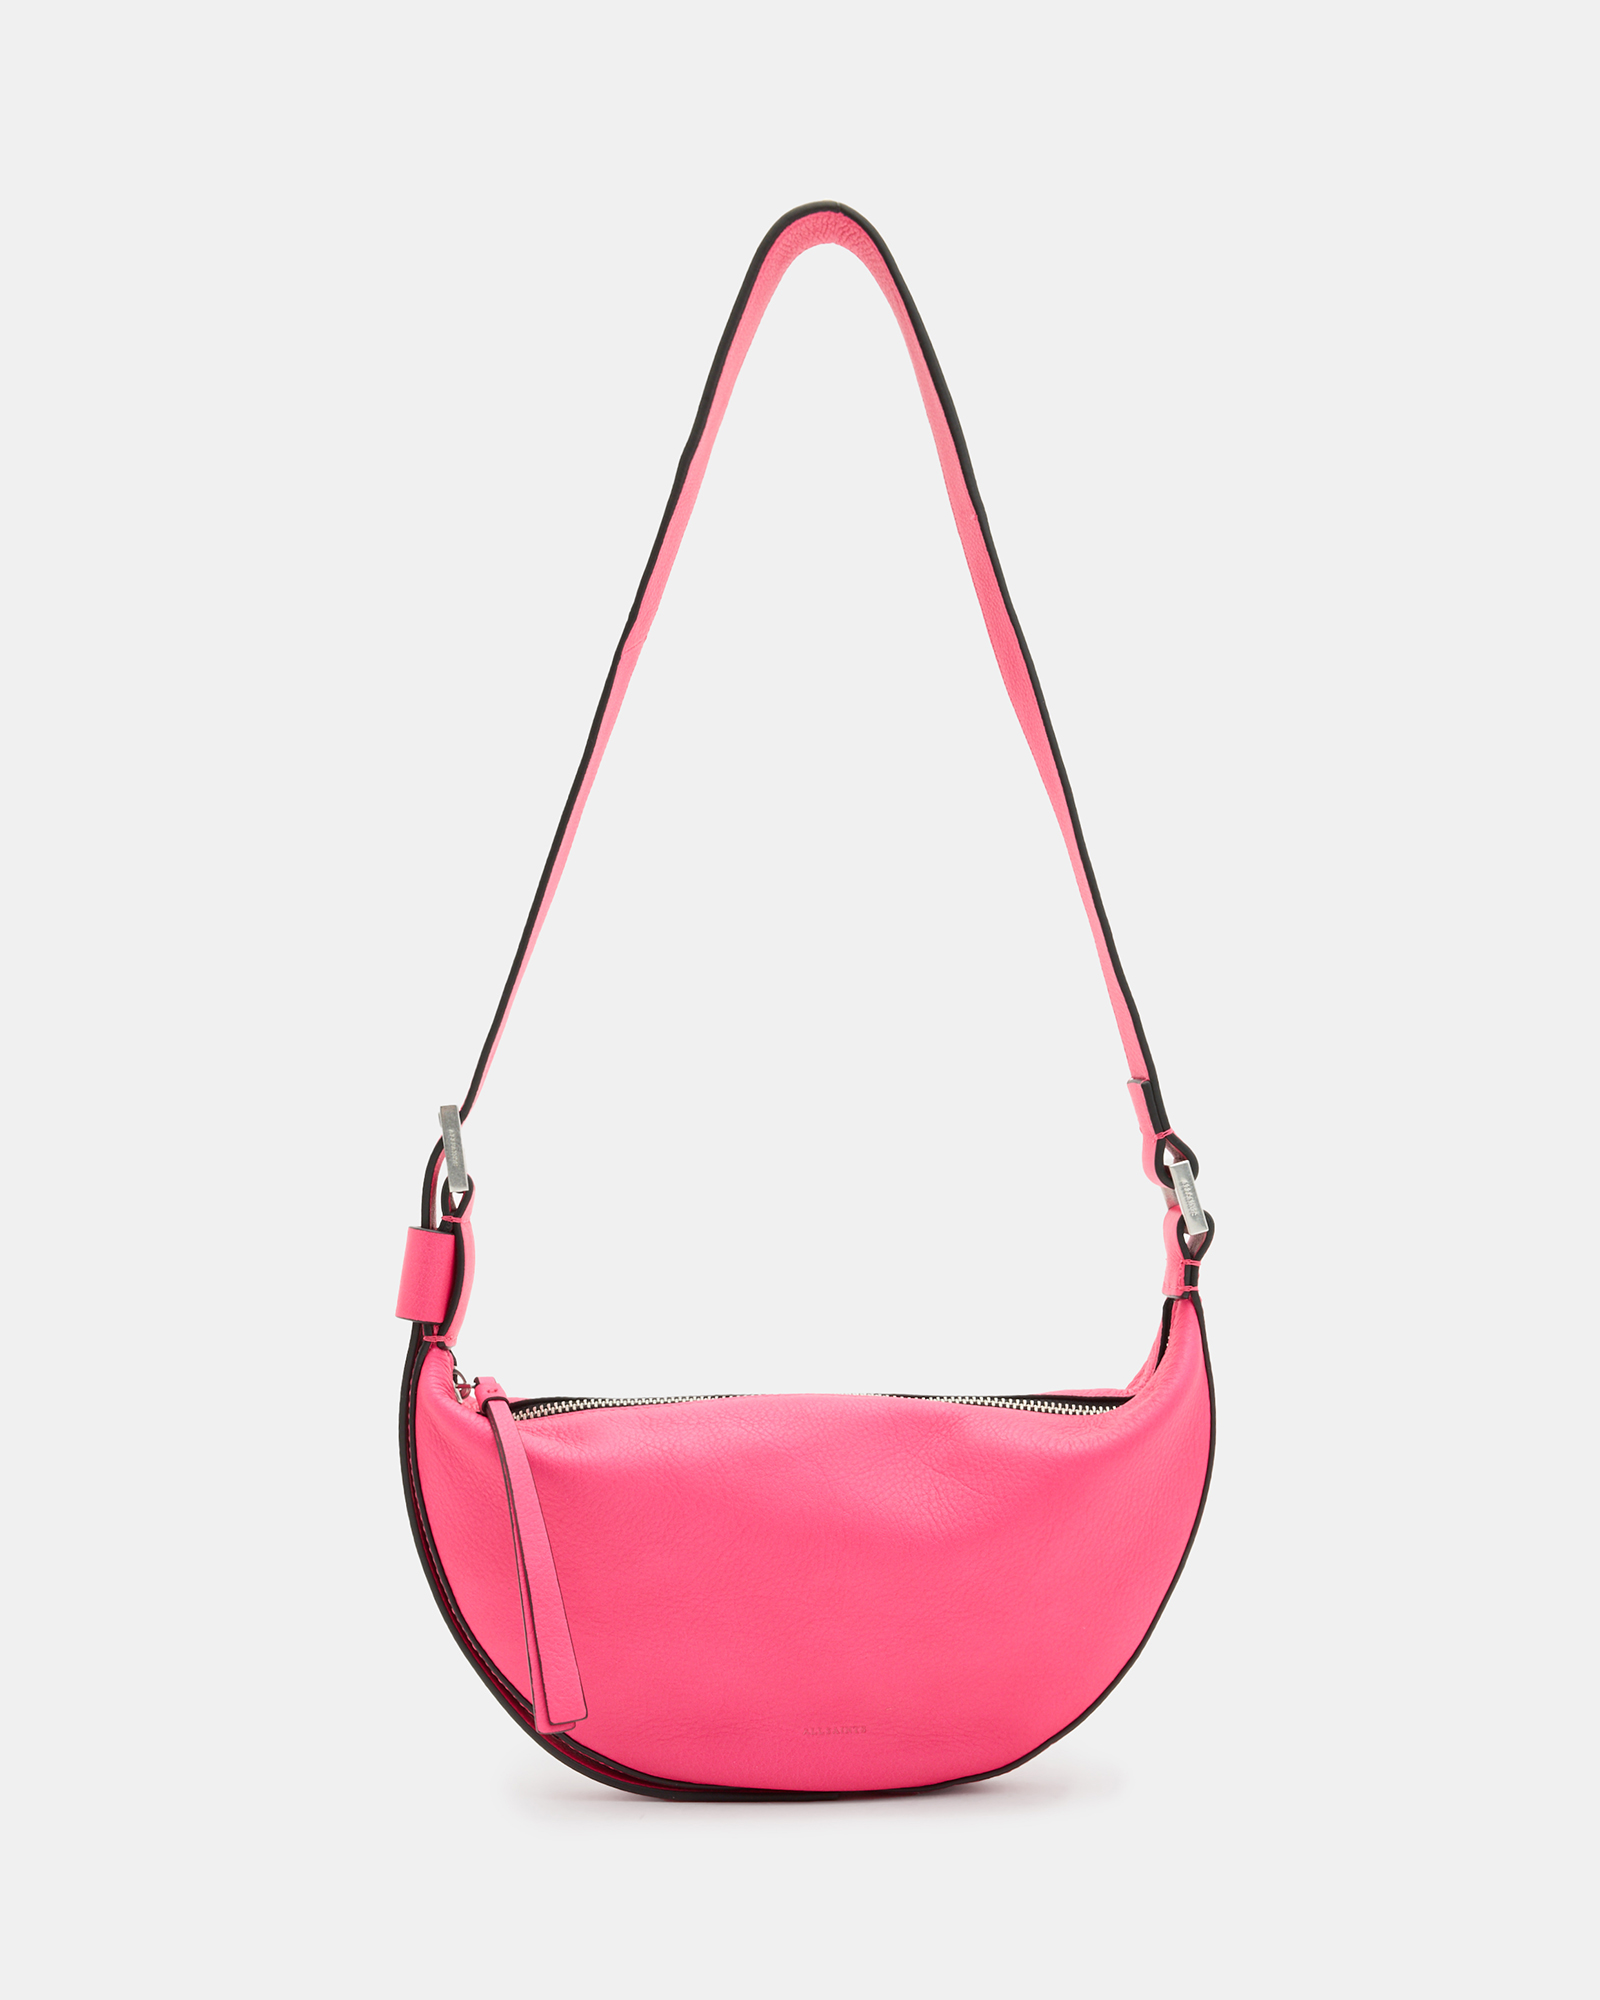 AllSaints Half Moon Leather Crossbody Bag,, Hot Pink